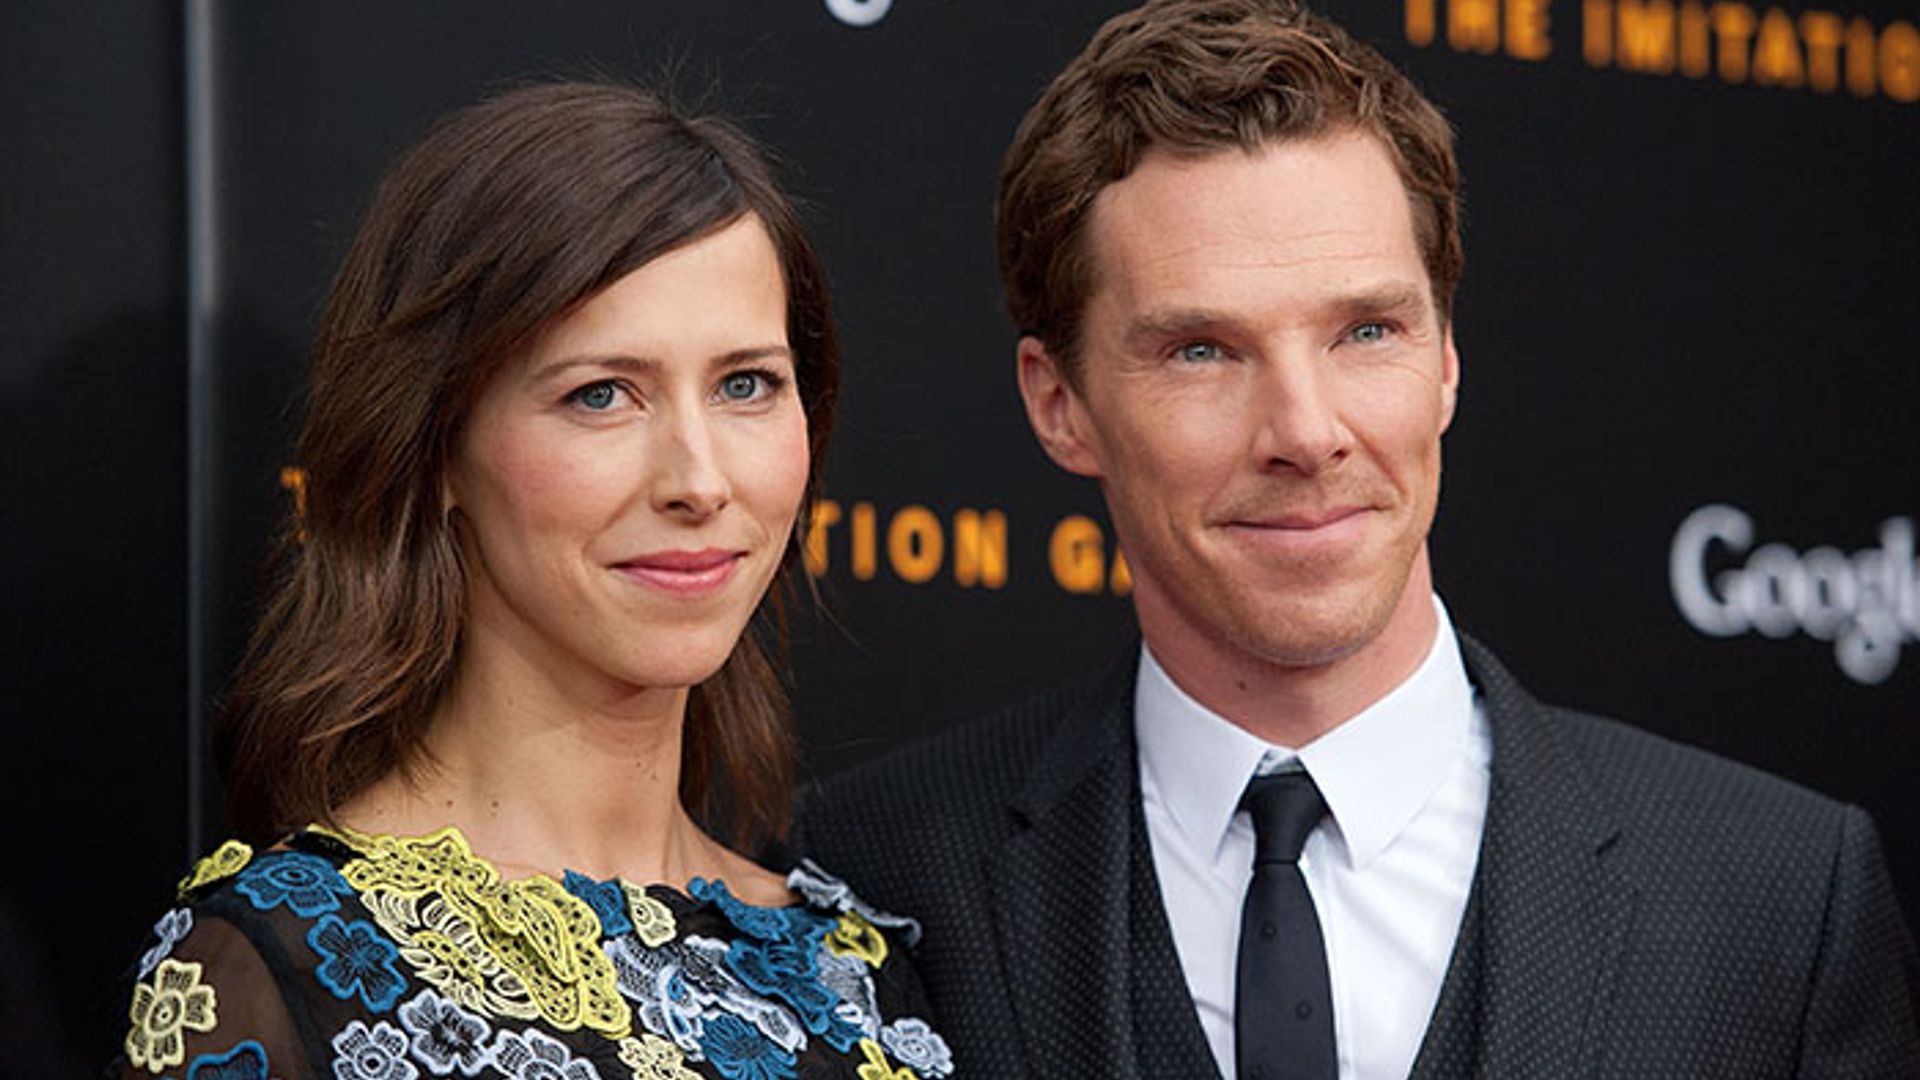 Benedict Cumberbatch introduces new fiancée Sophie Hunter to HELLO! magazine